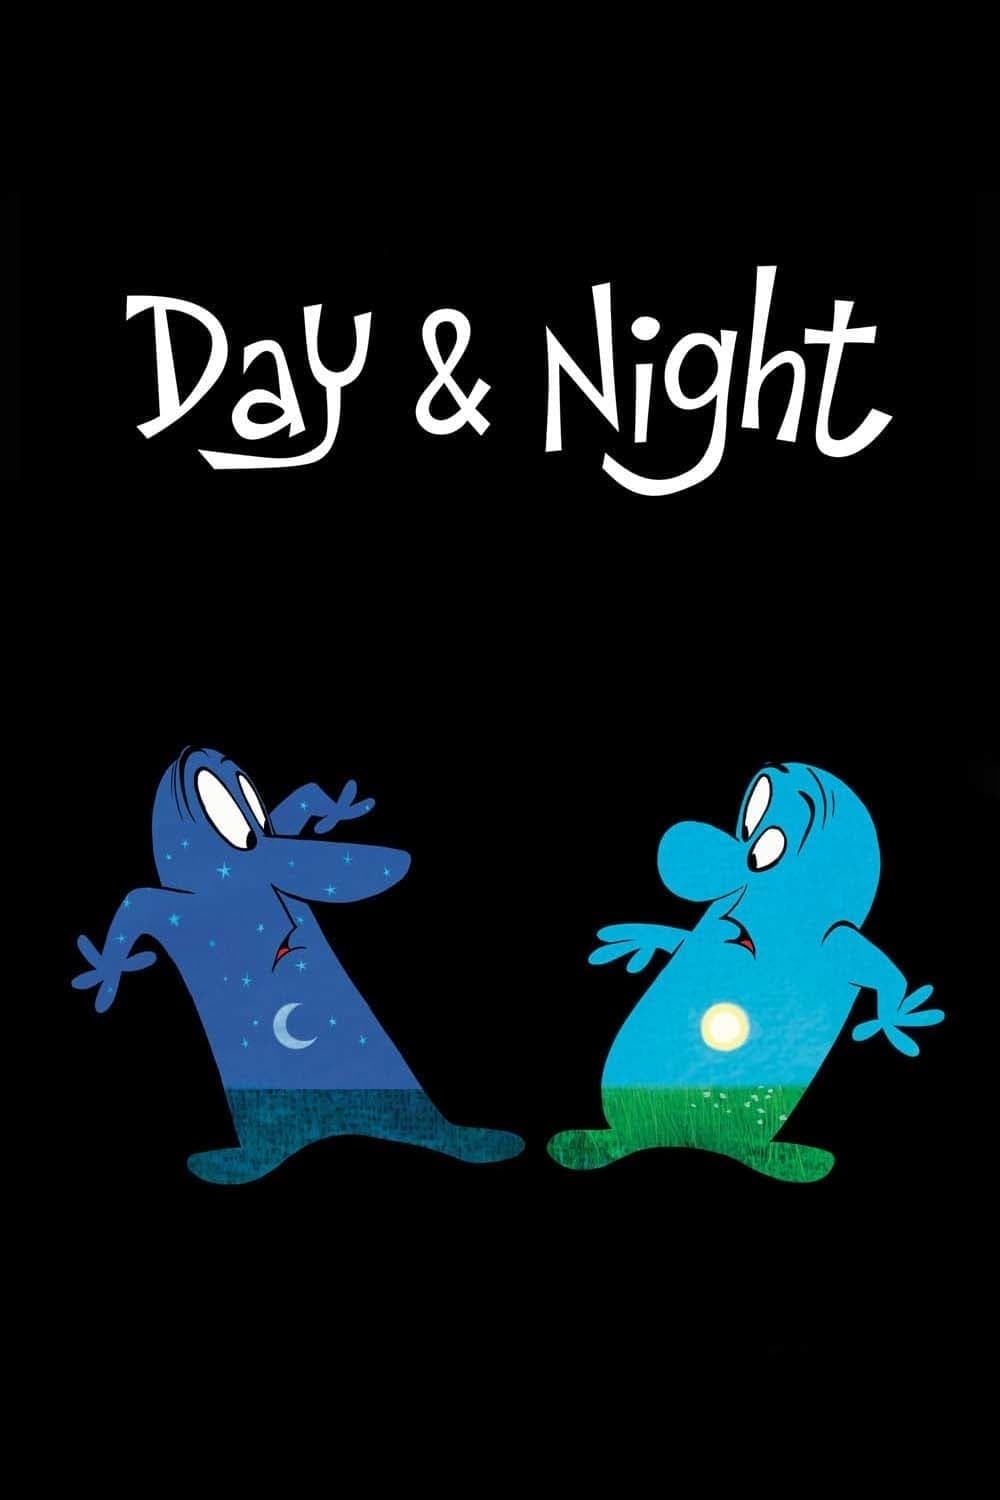 Day & Night (2010)